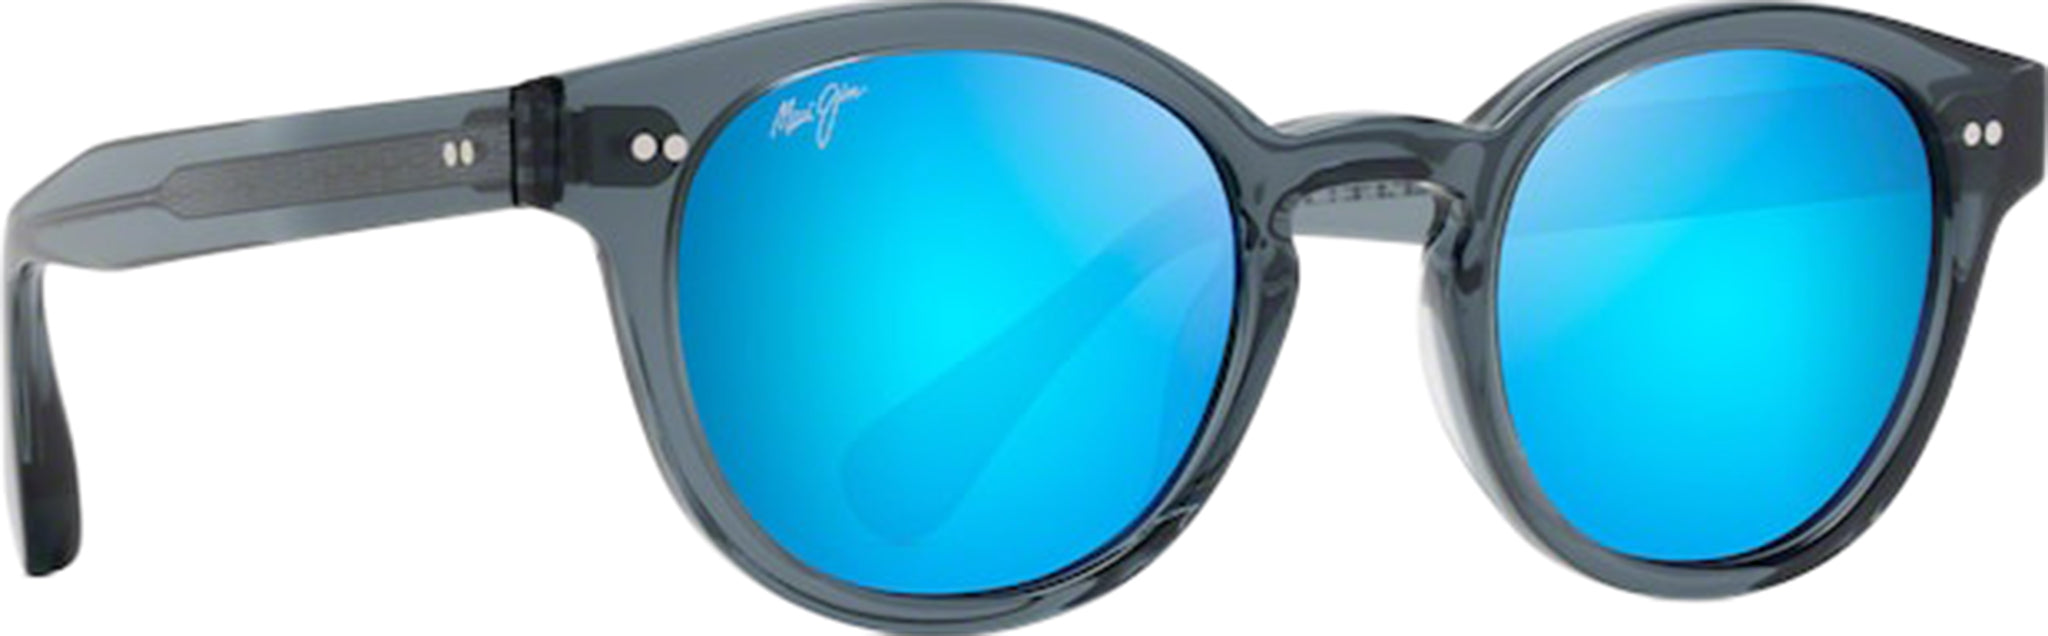 Body Glove Polarized Sunglasses. Clear Frame Blue/Green Mirror